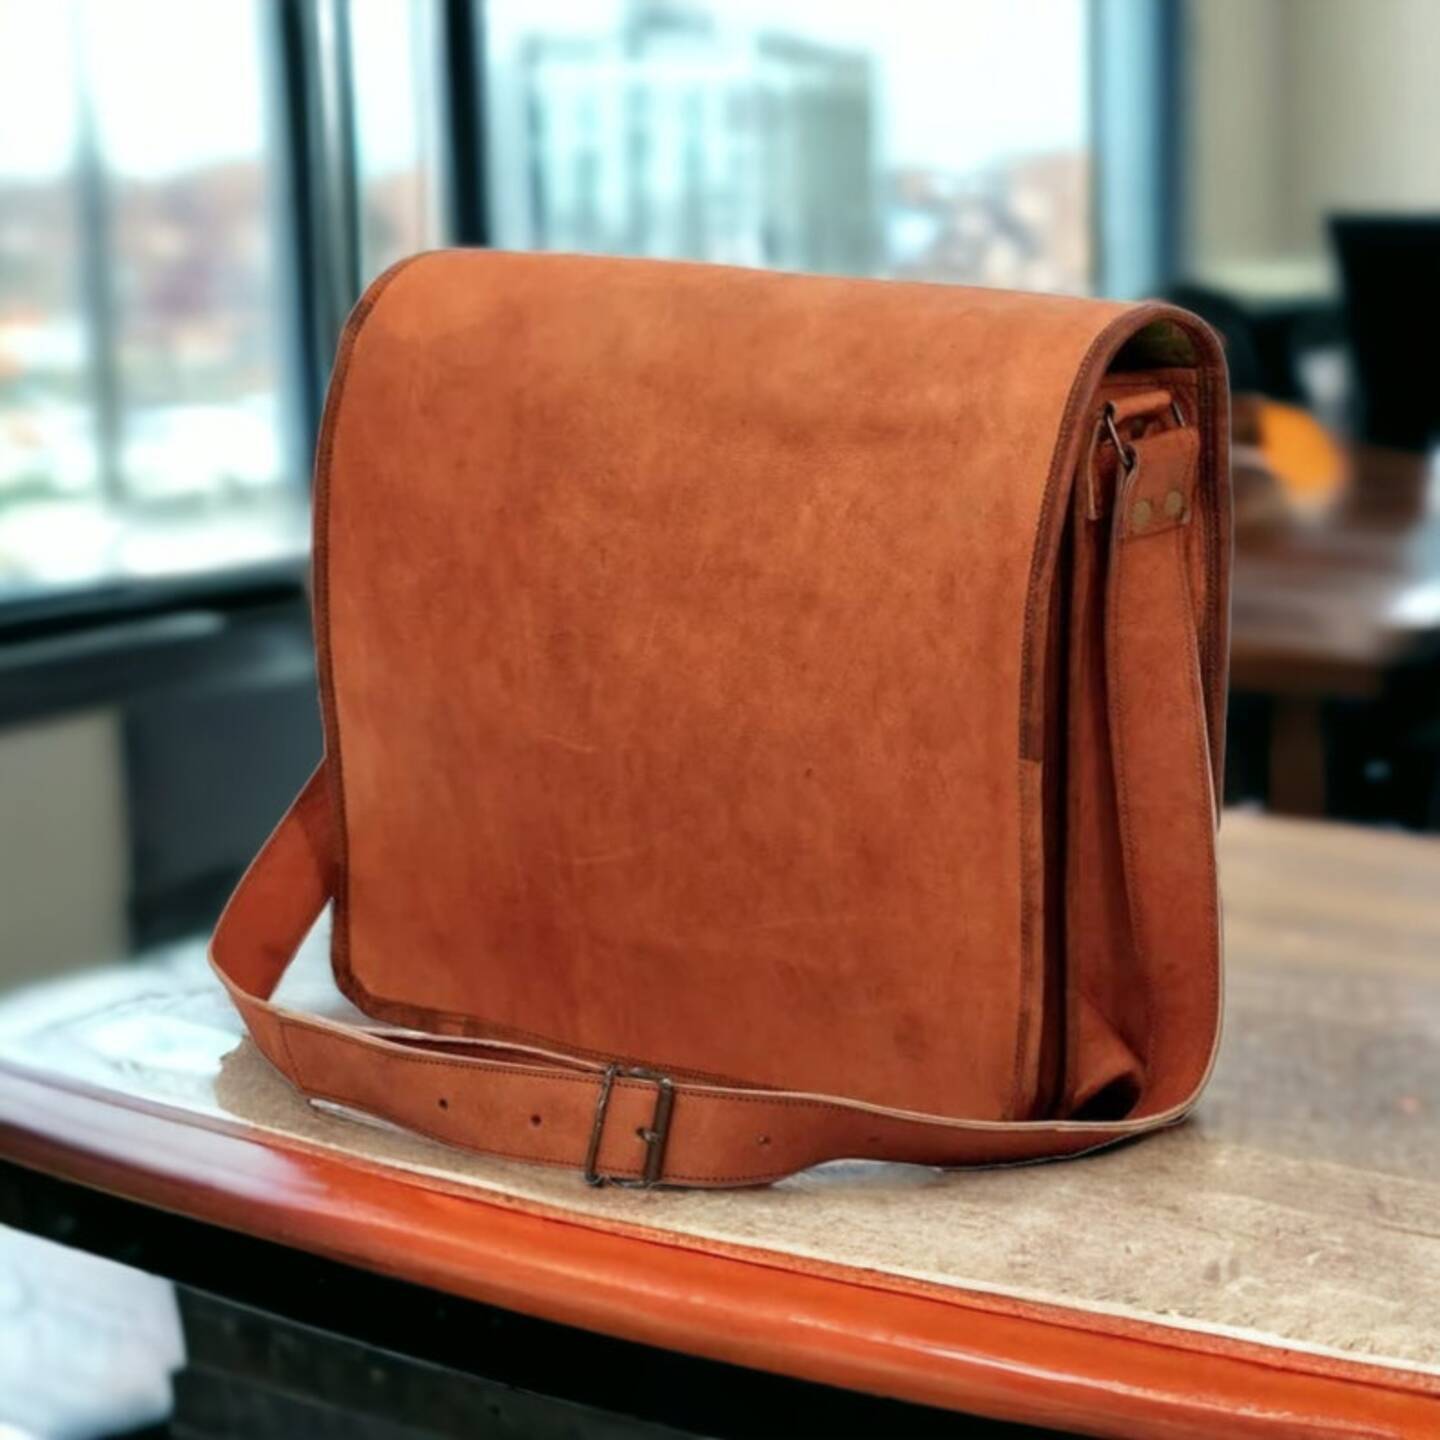 Leather Messenger Bag, gift for men and women, Leather Cross Body, Laptop Briefcase, Shoulder Bag leather bag men leather bag